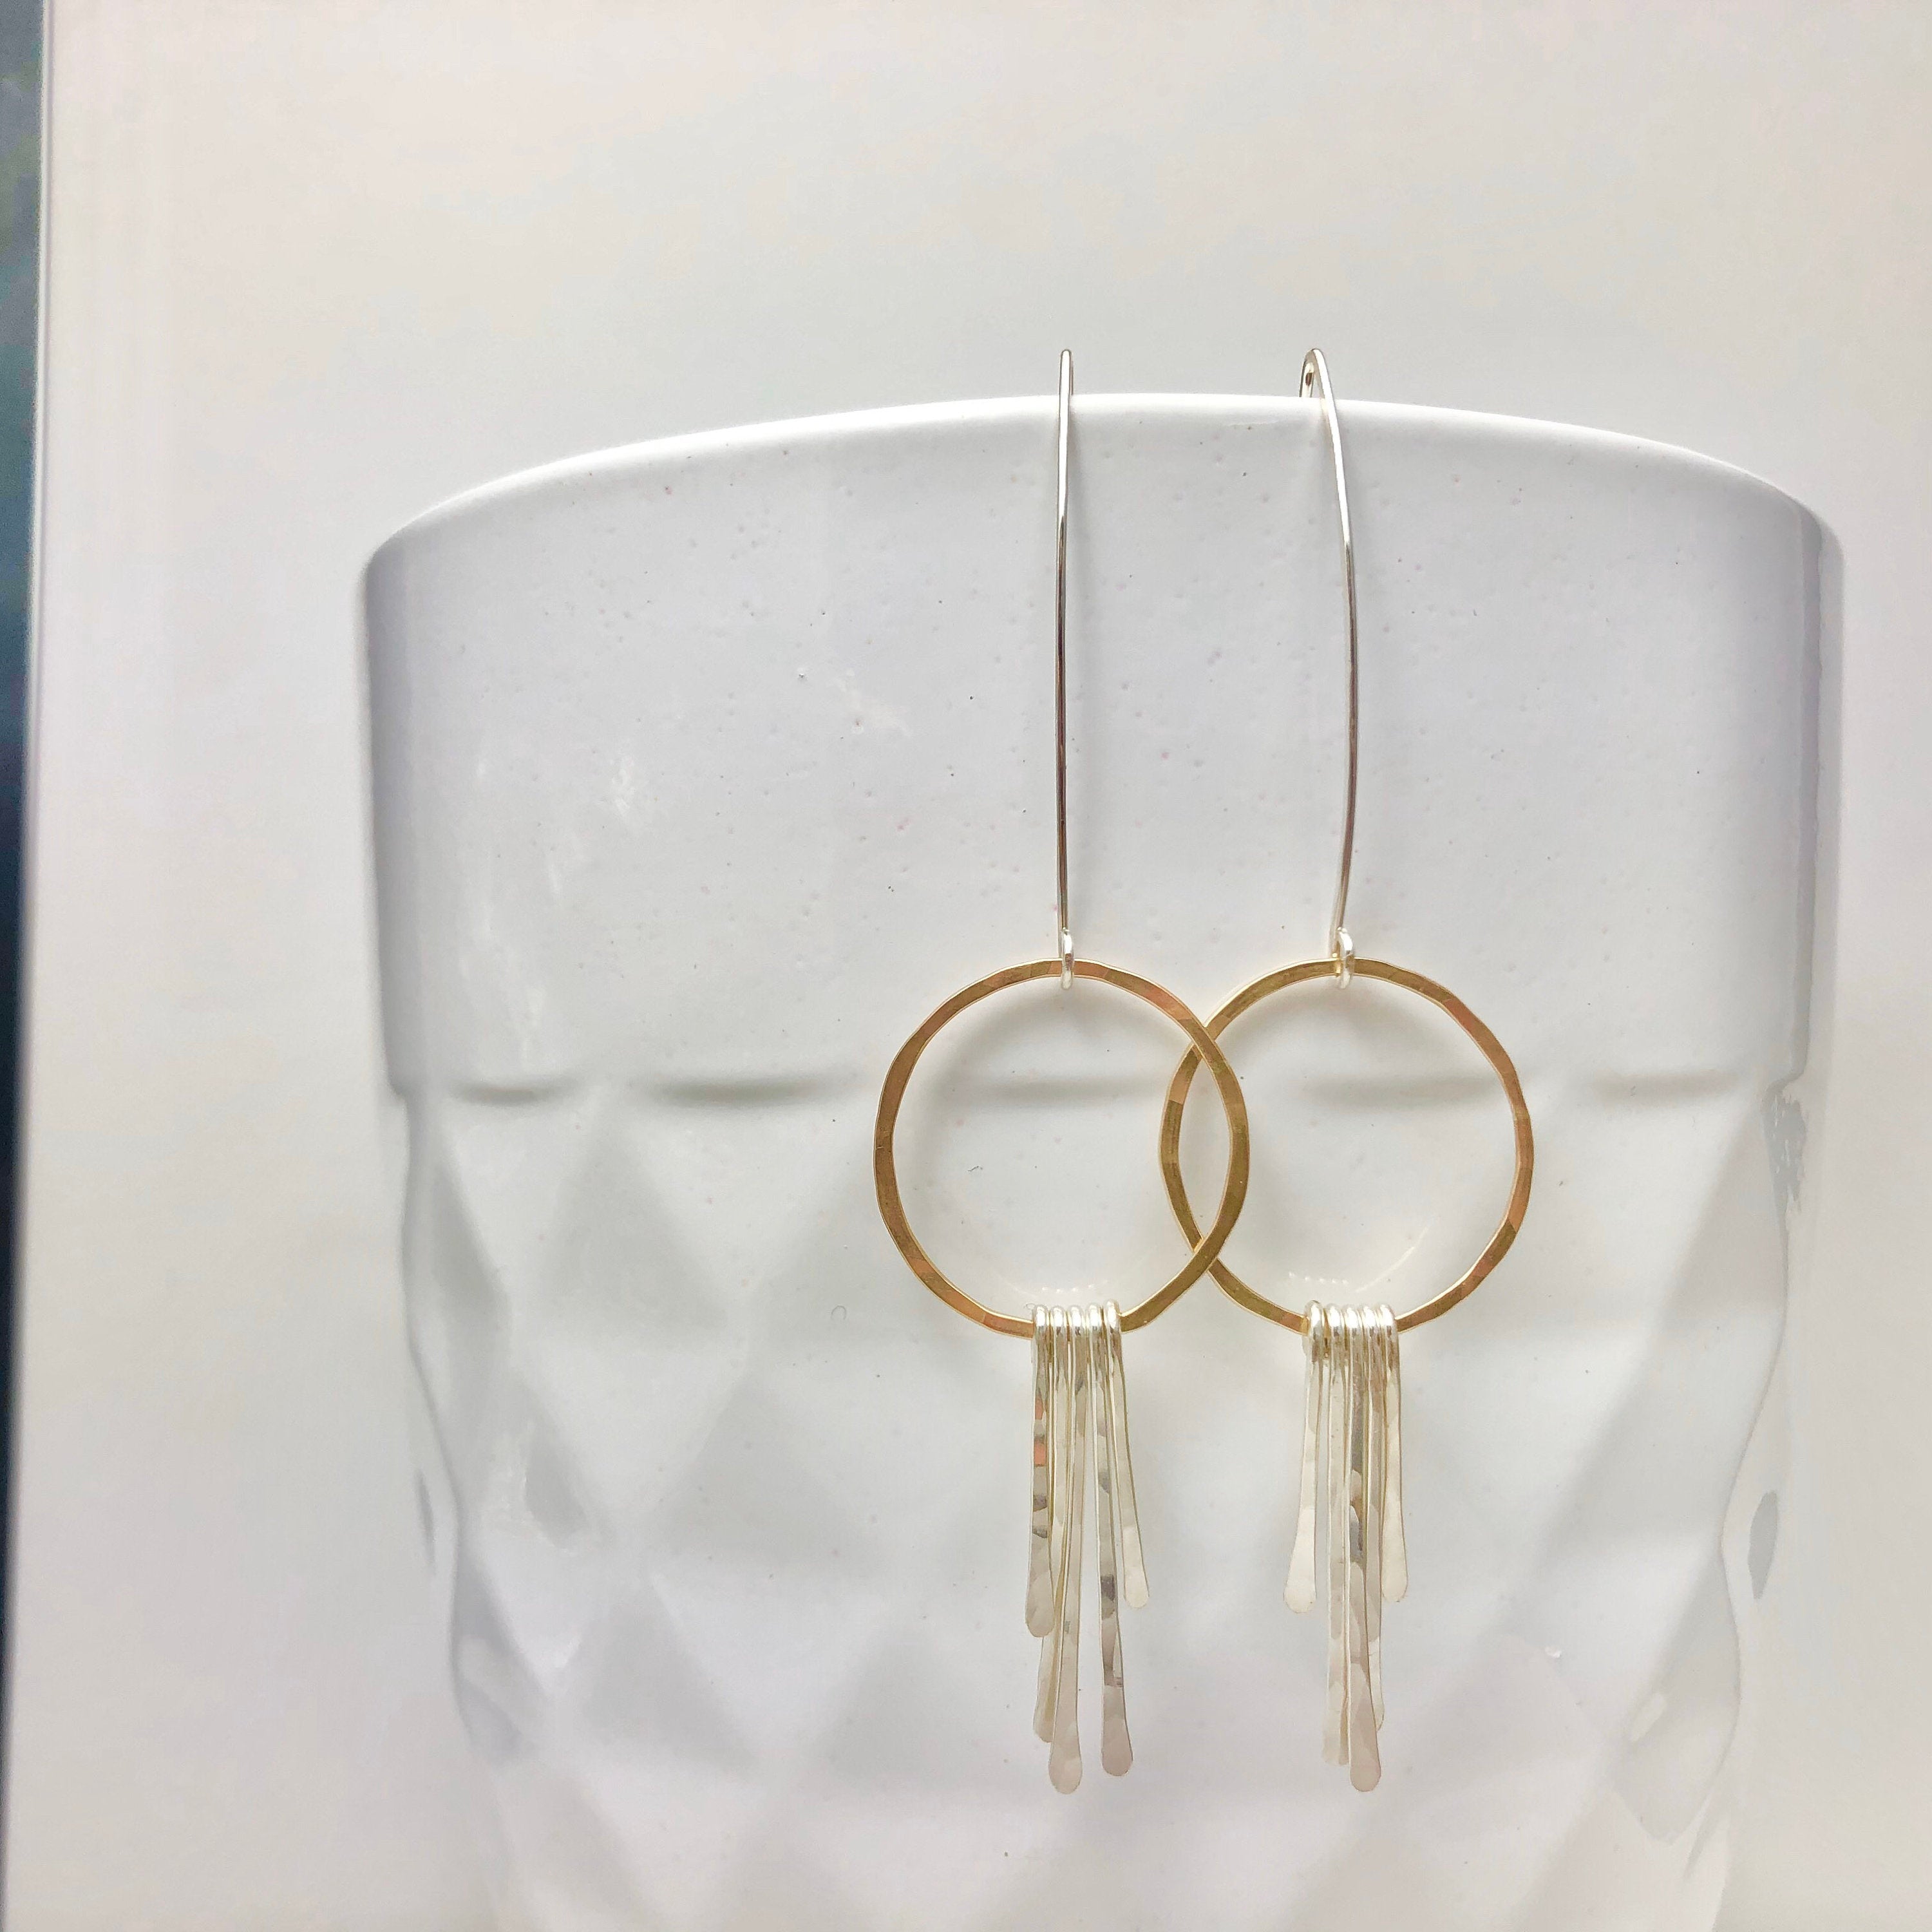 Gold Hoop Earrings with Sterling Silver Bar Fringe